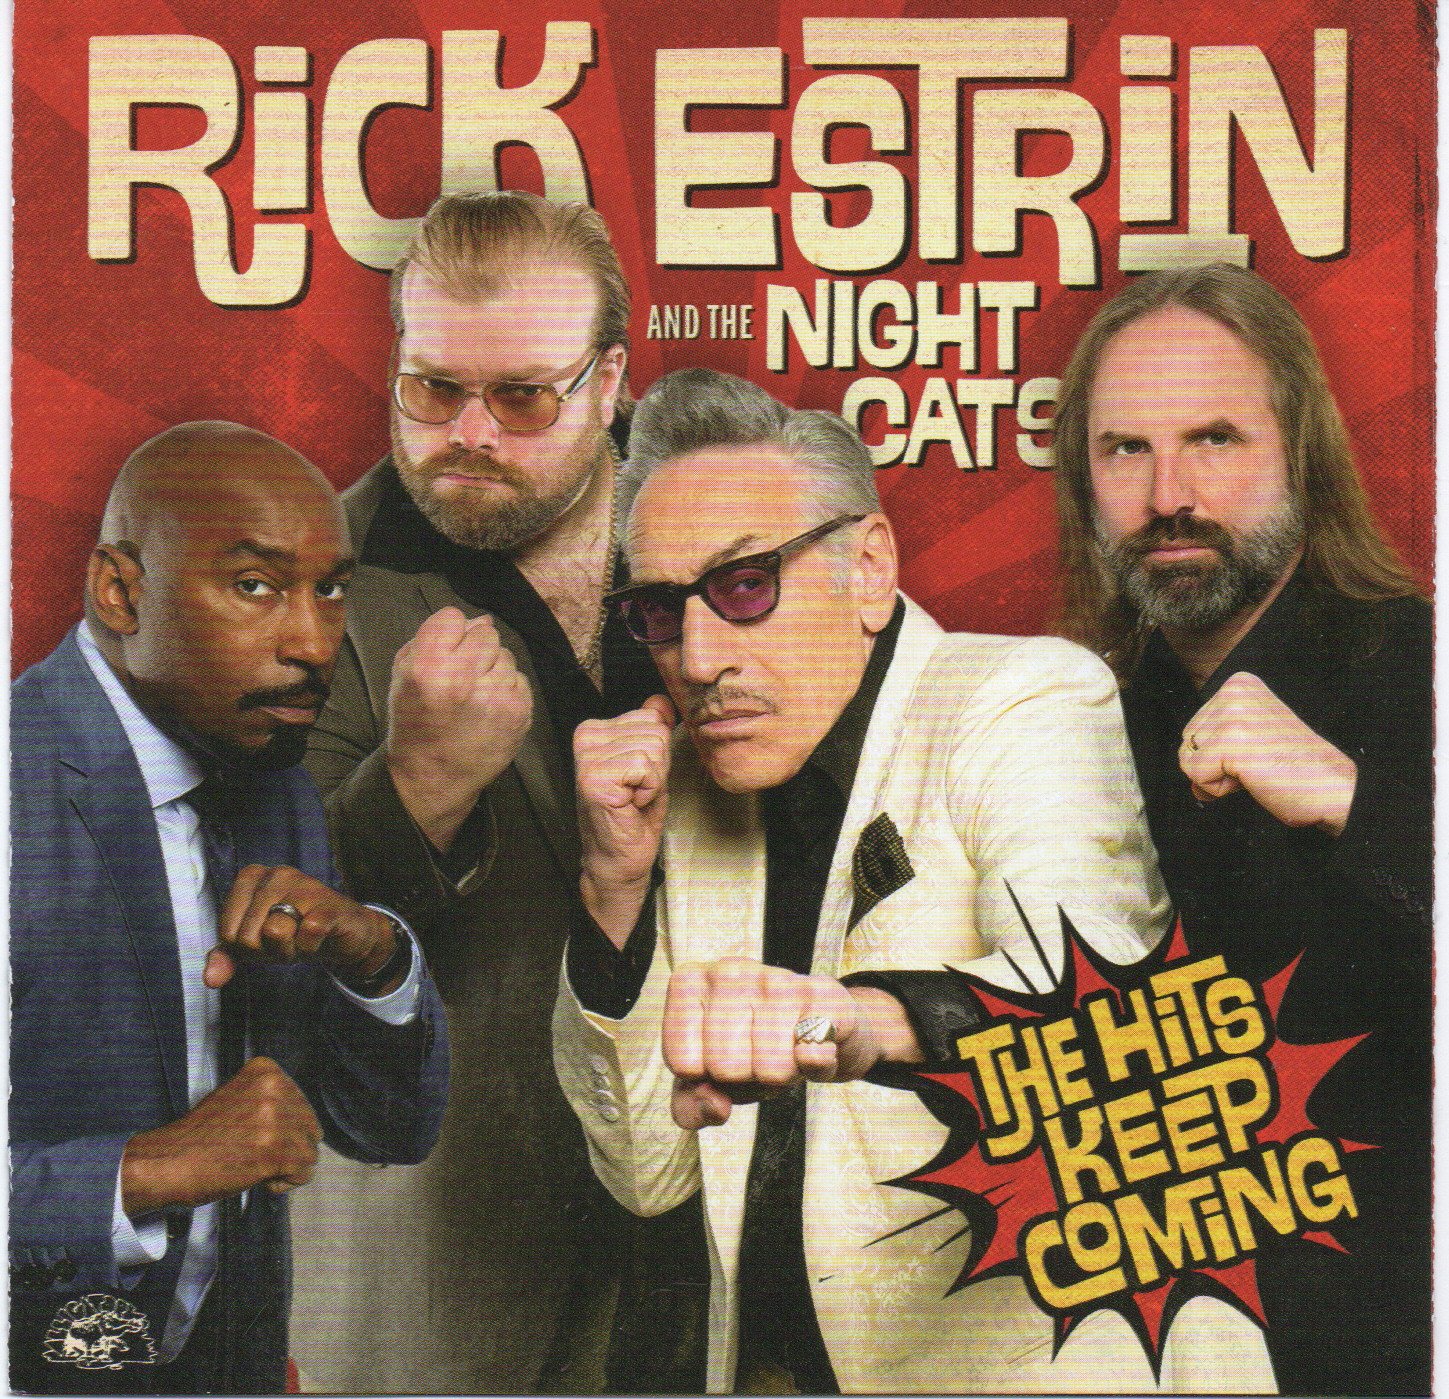 Rick Estrin And The Nights Cats "The Hits Keep Coming"